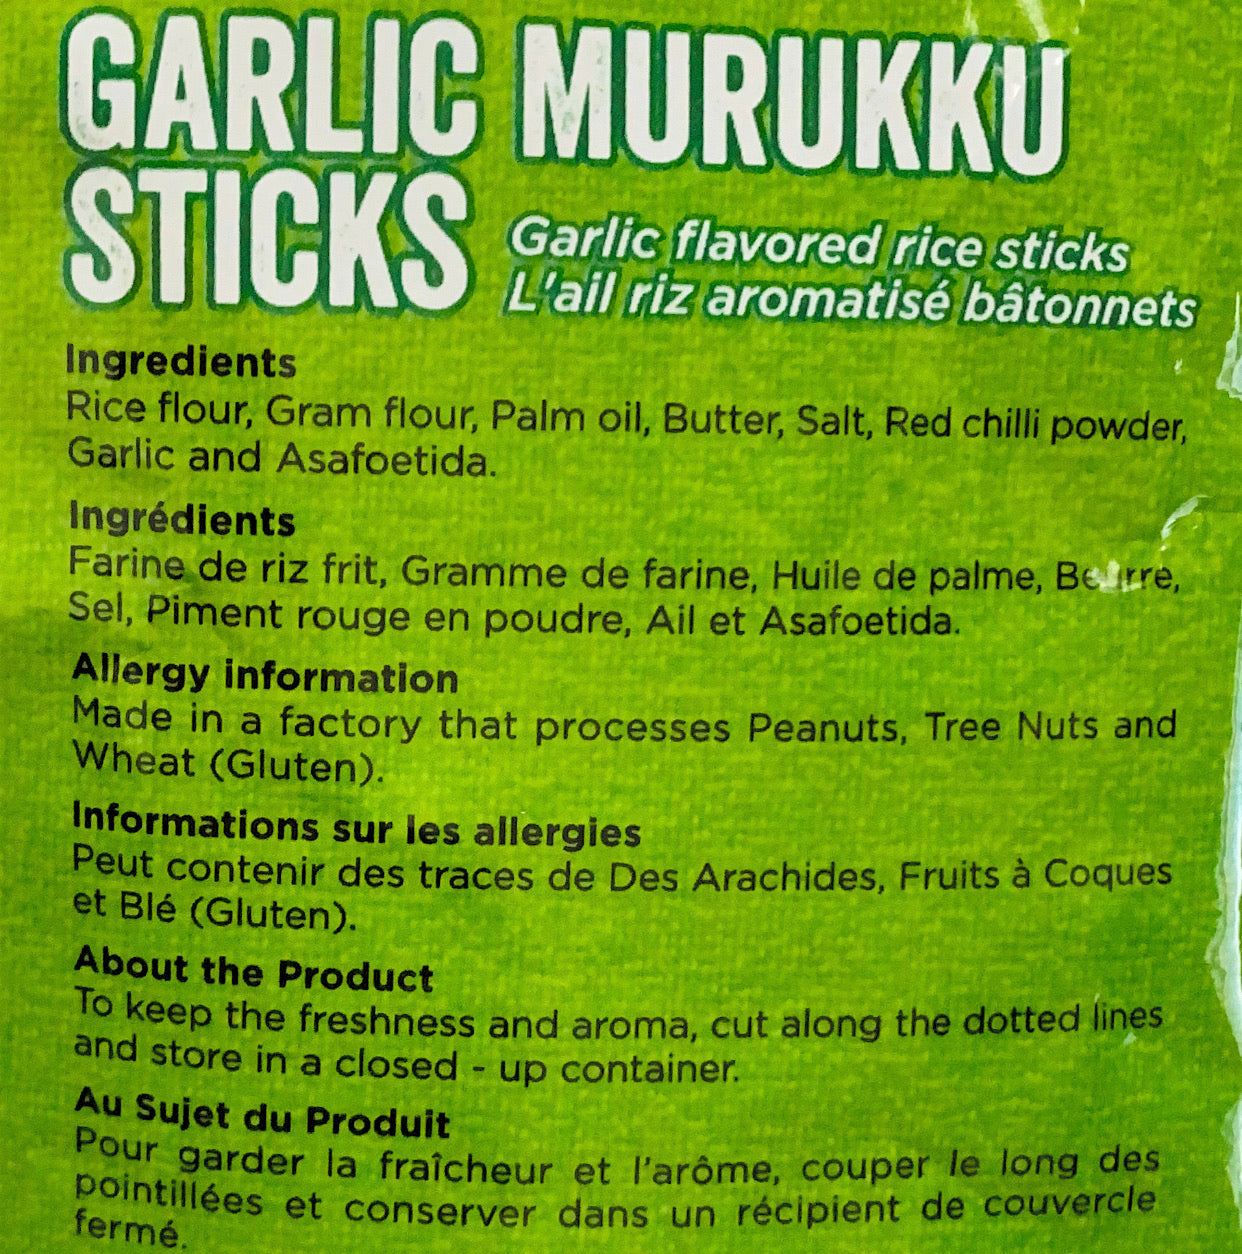 Garlic Murukku Sticks